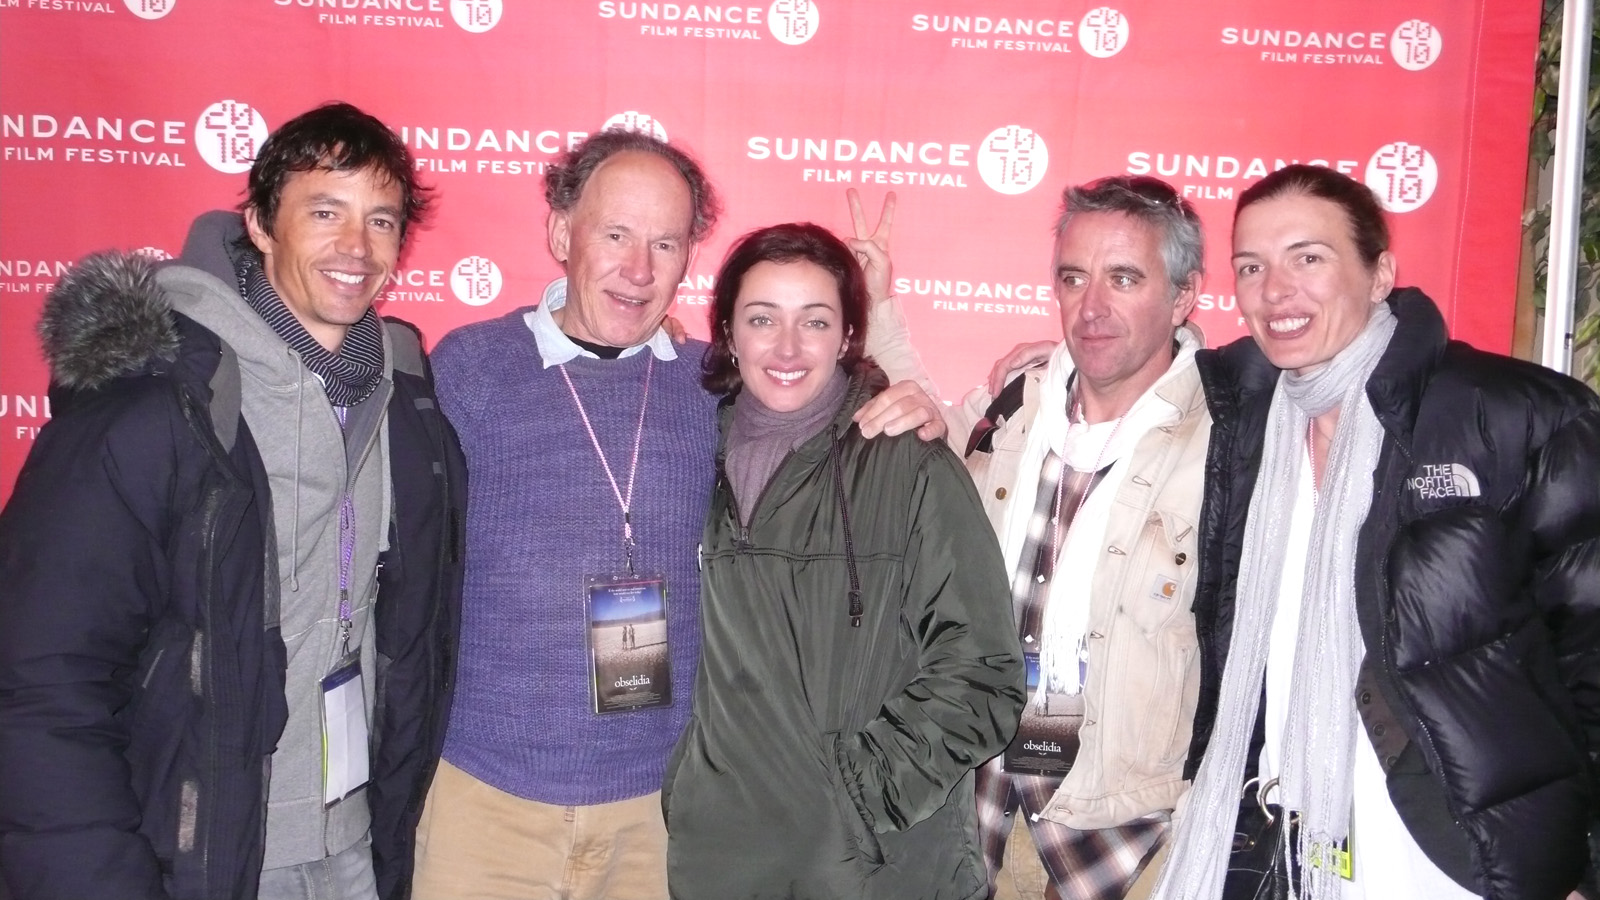 Sundance 2010 (Obselidia) Michael Piccirilli, Frank Taylor, Gaynor Howe, Chris Byrne, Diane Bell